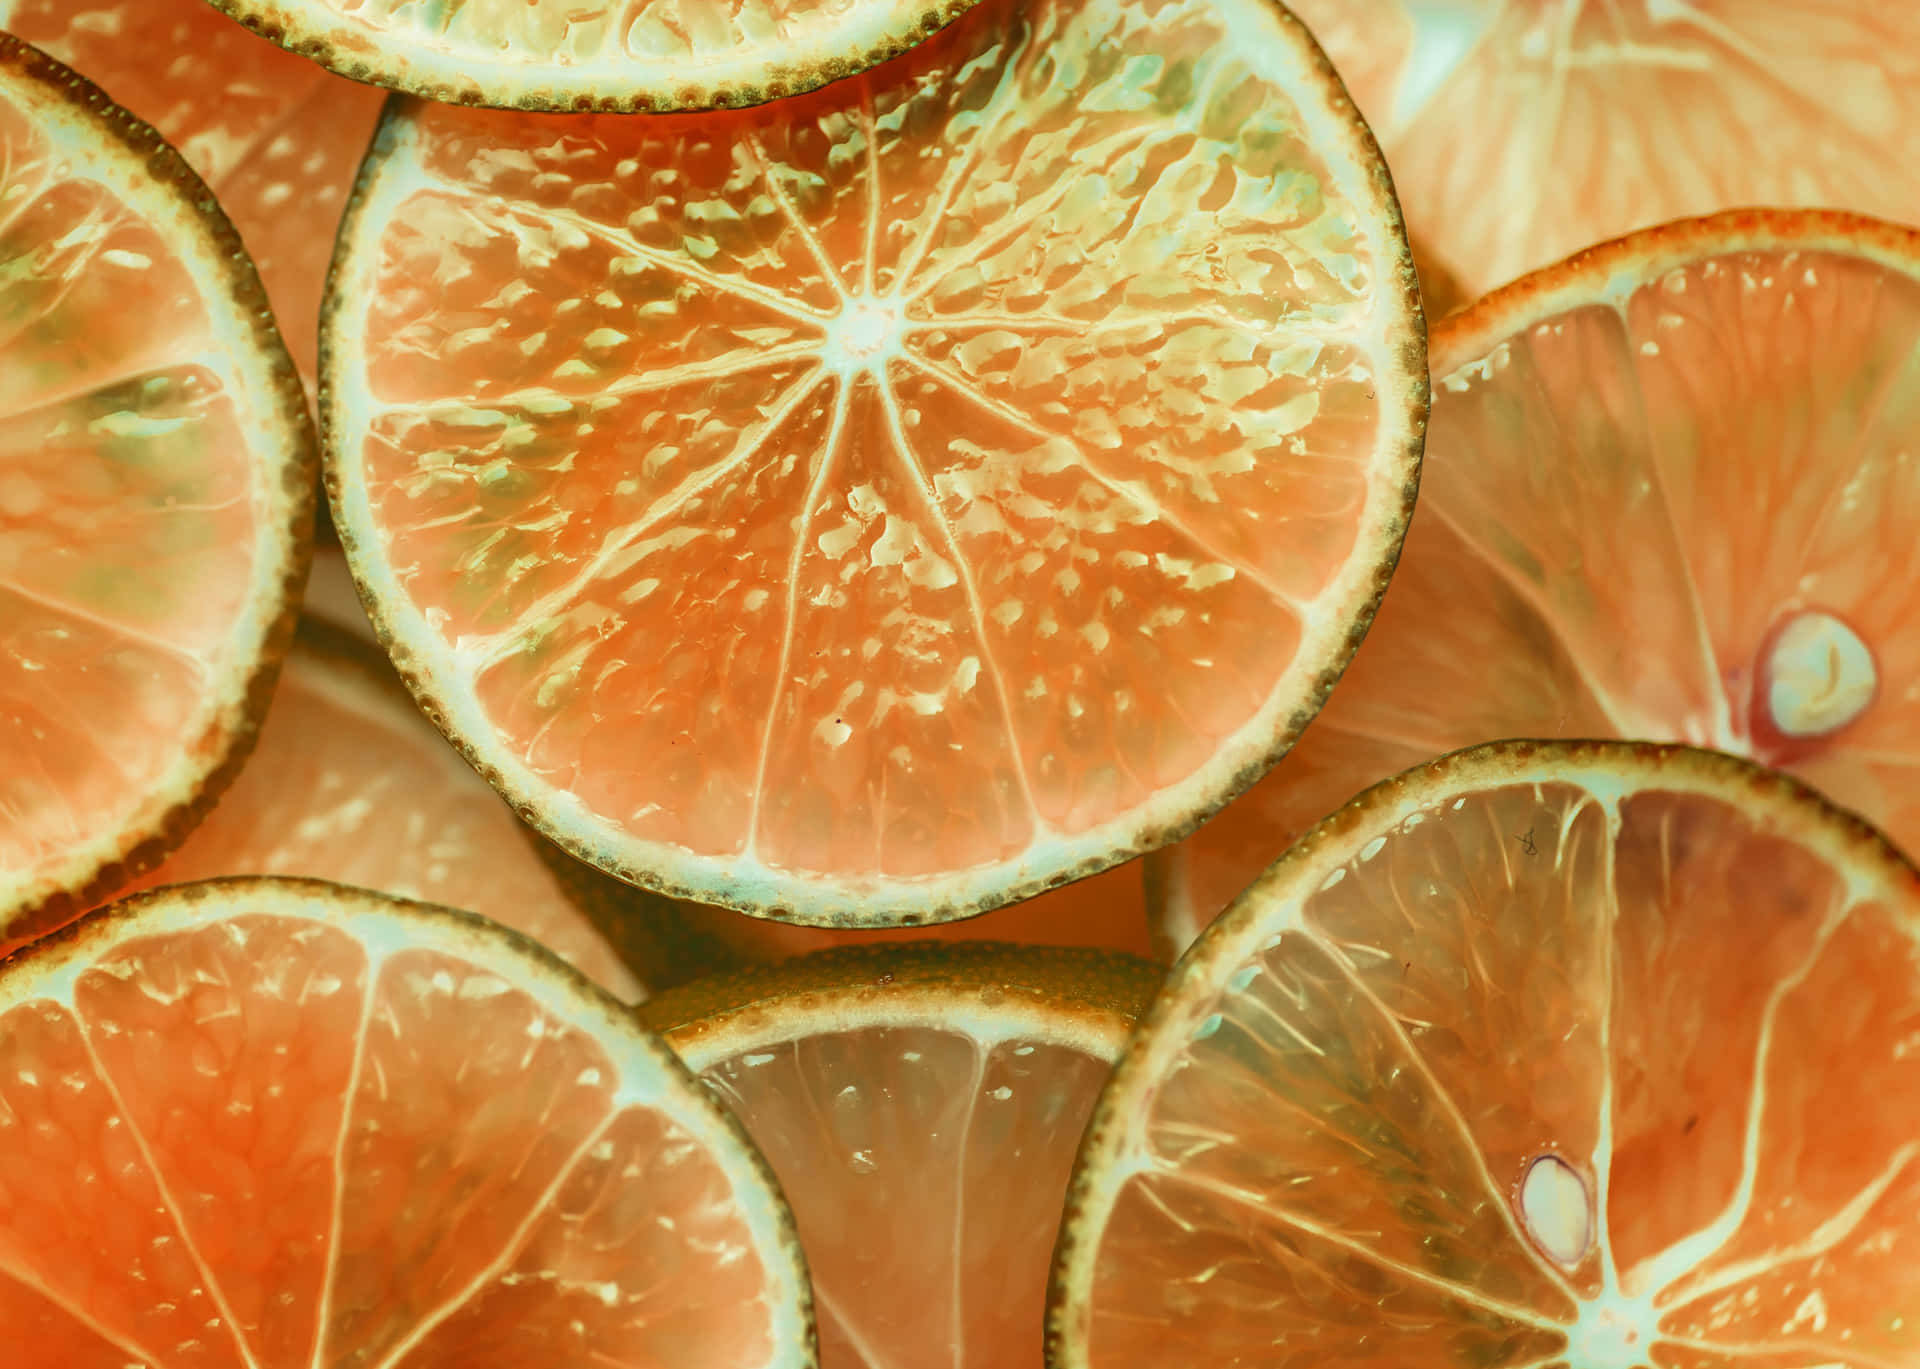 Sliced Citrus Fruit Texture Wallpaper